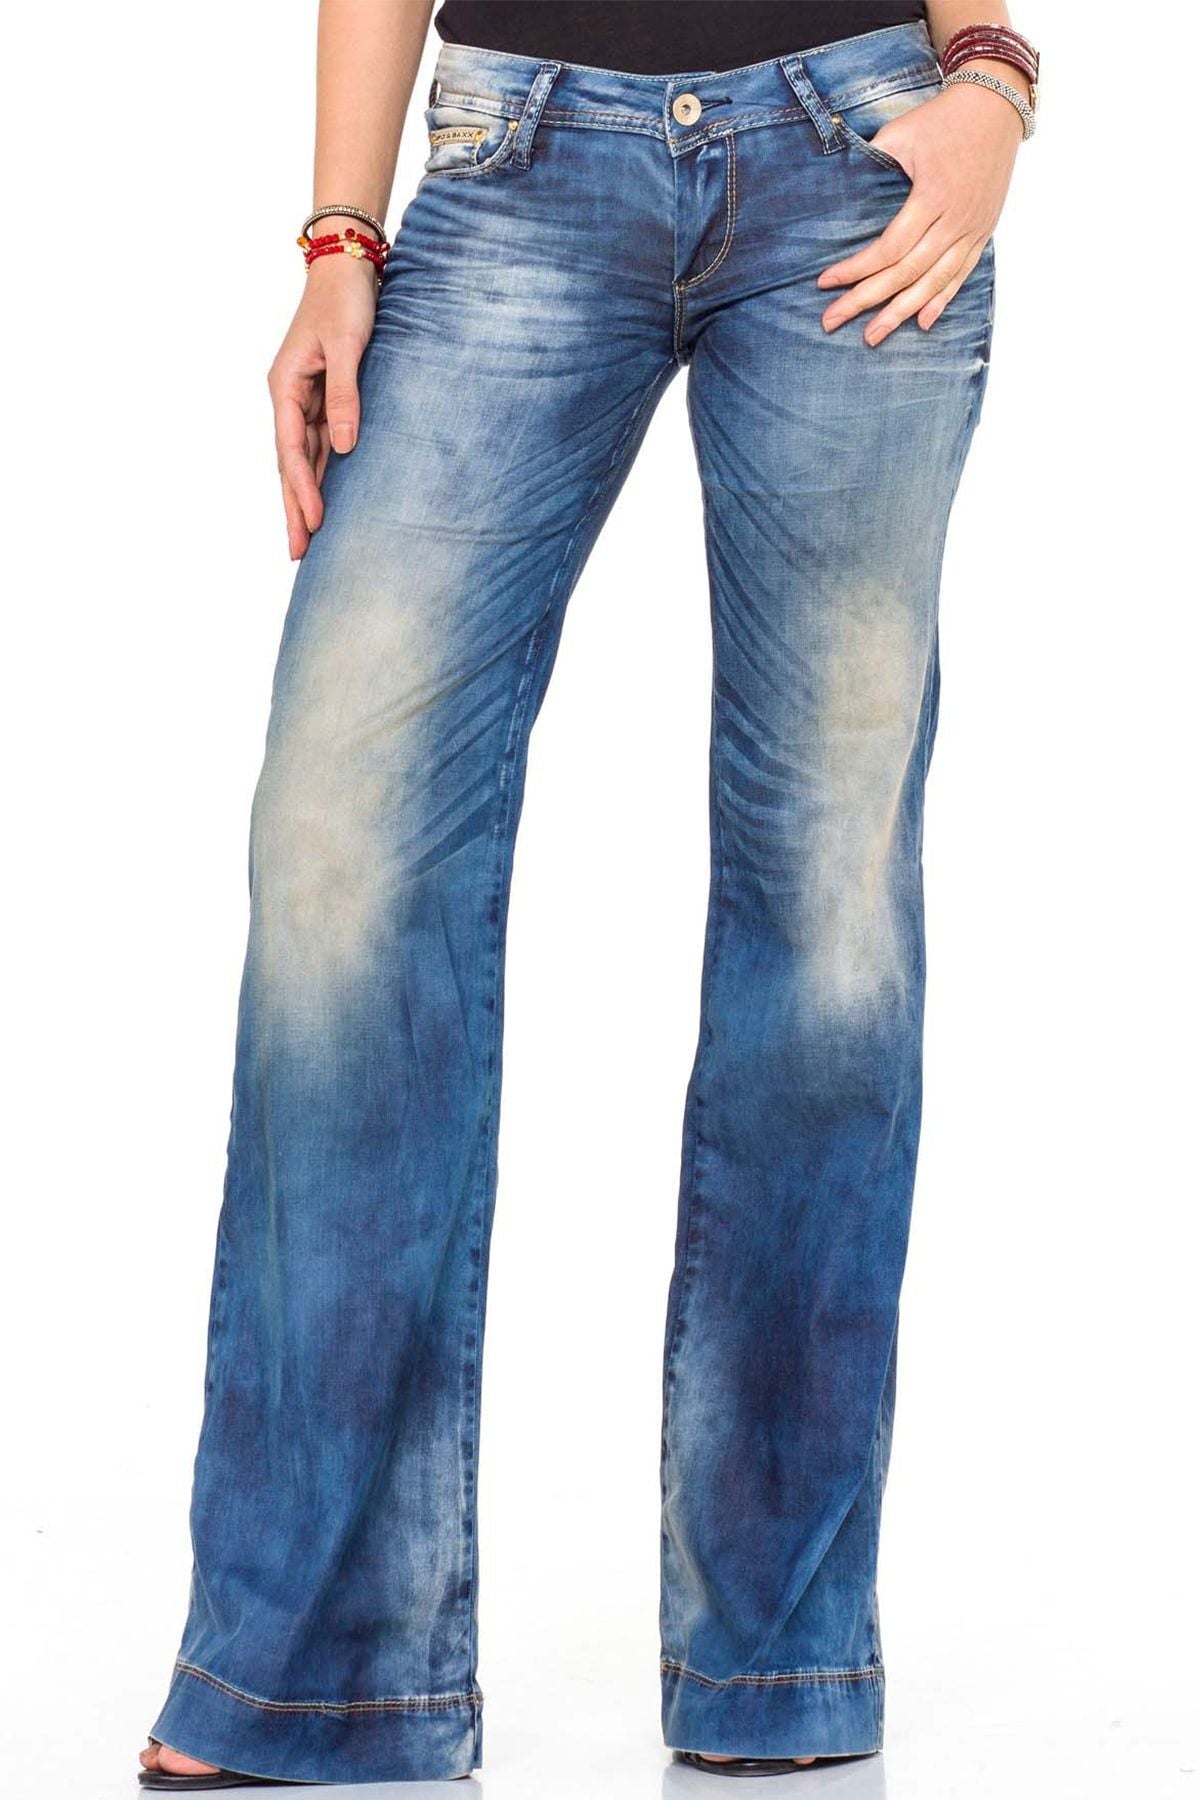 CBW-0424 Standaard Damen jeans